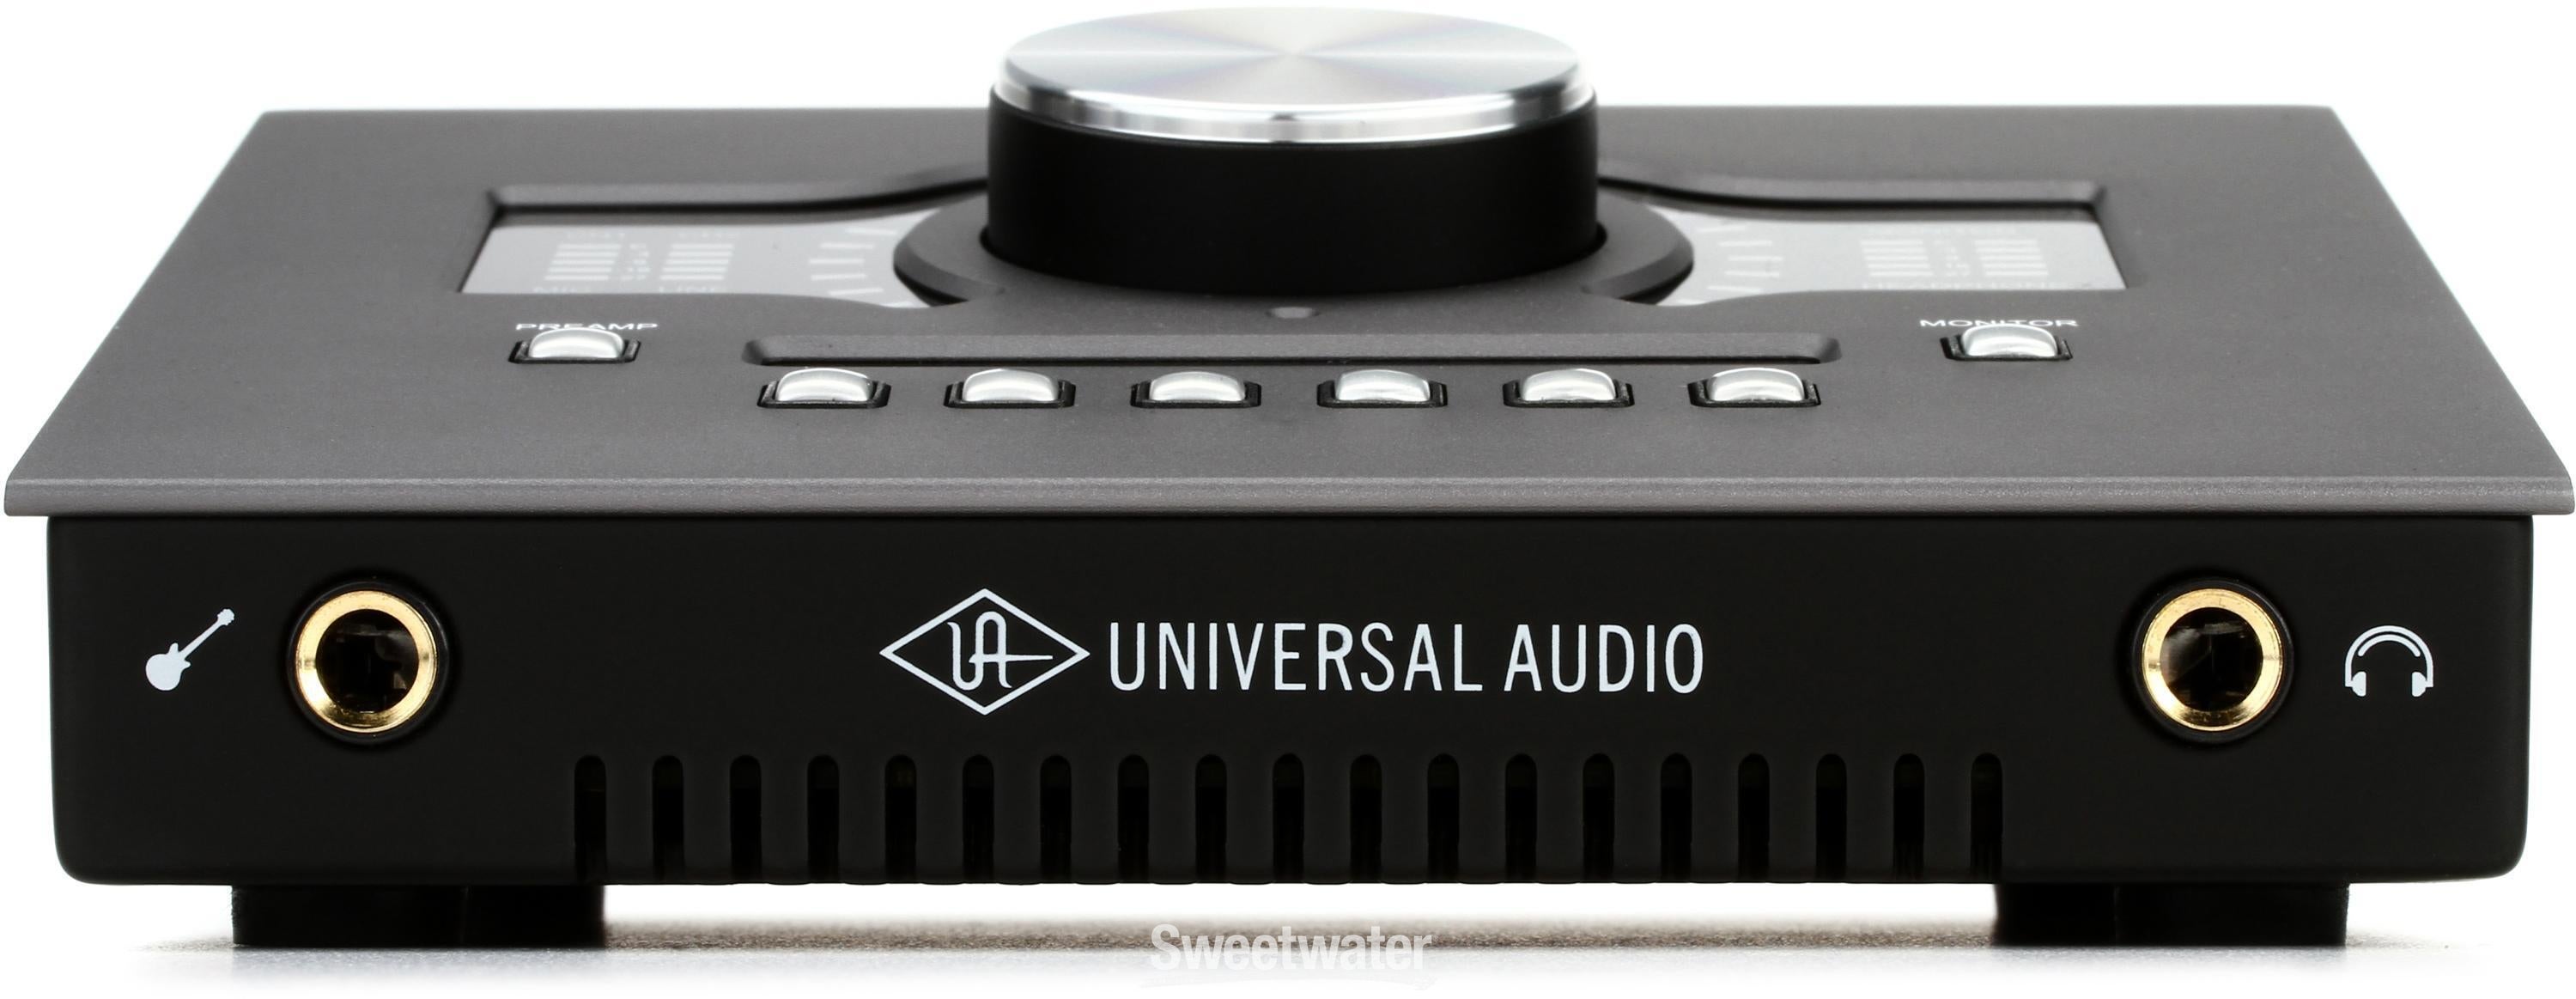 Universal Audio Apollo Twin MK2 Quad - DTM/DAW